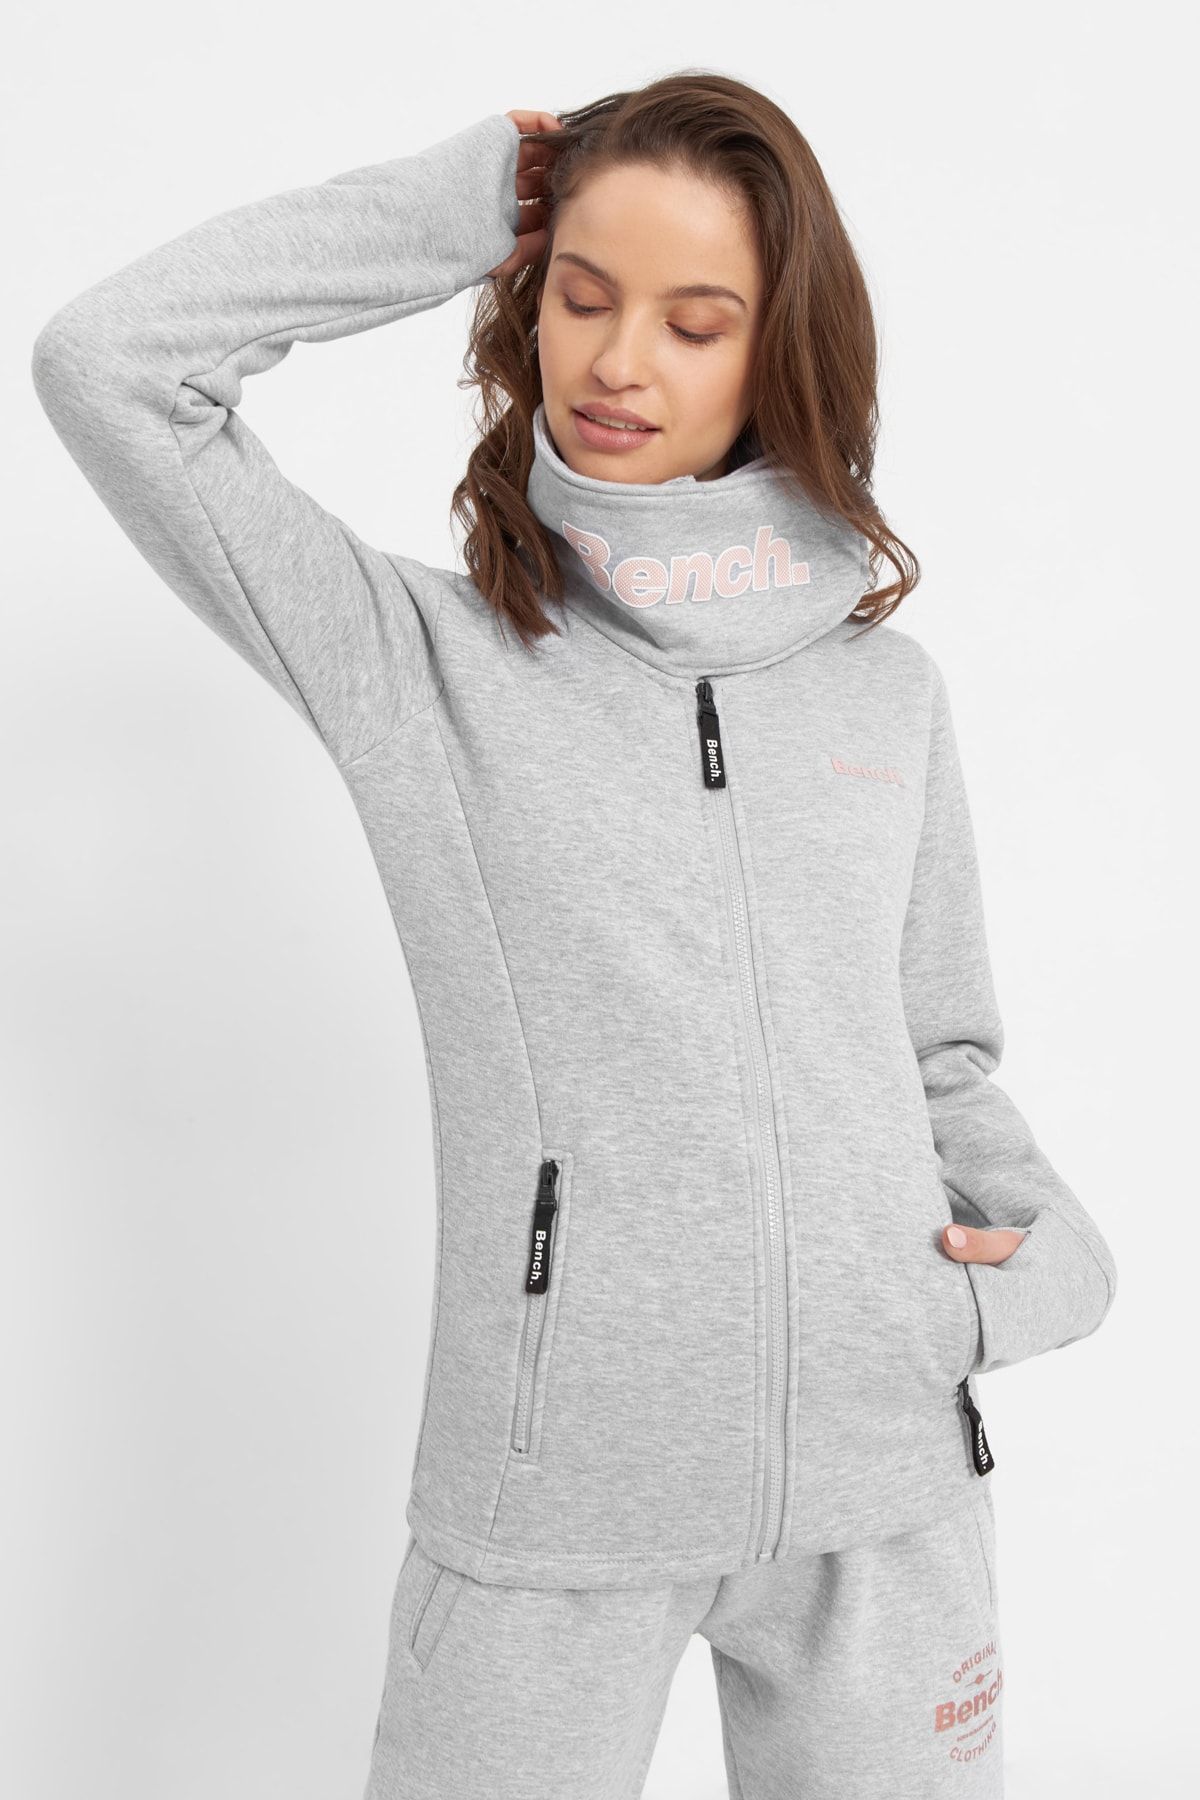 BENCH Sweatshirt - Gray - Regular fit - Trendyol